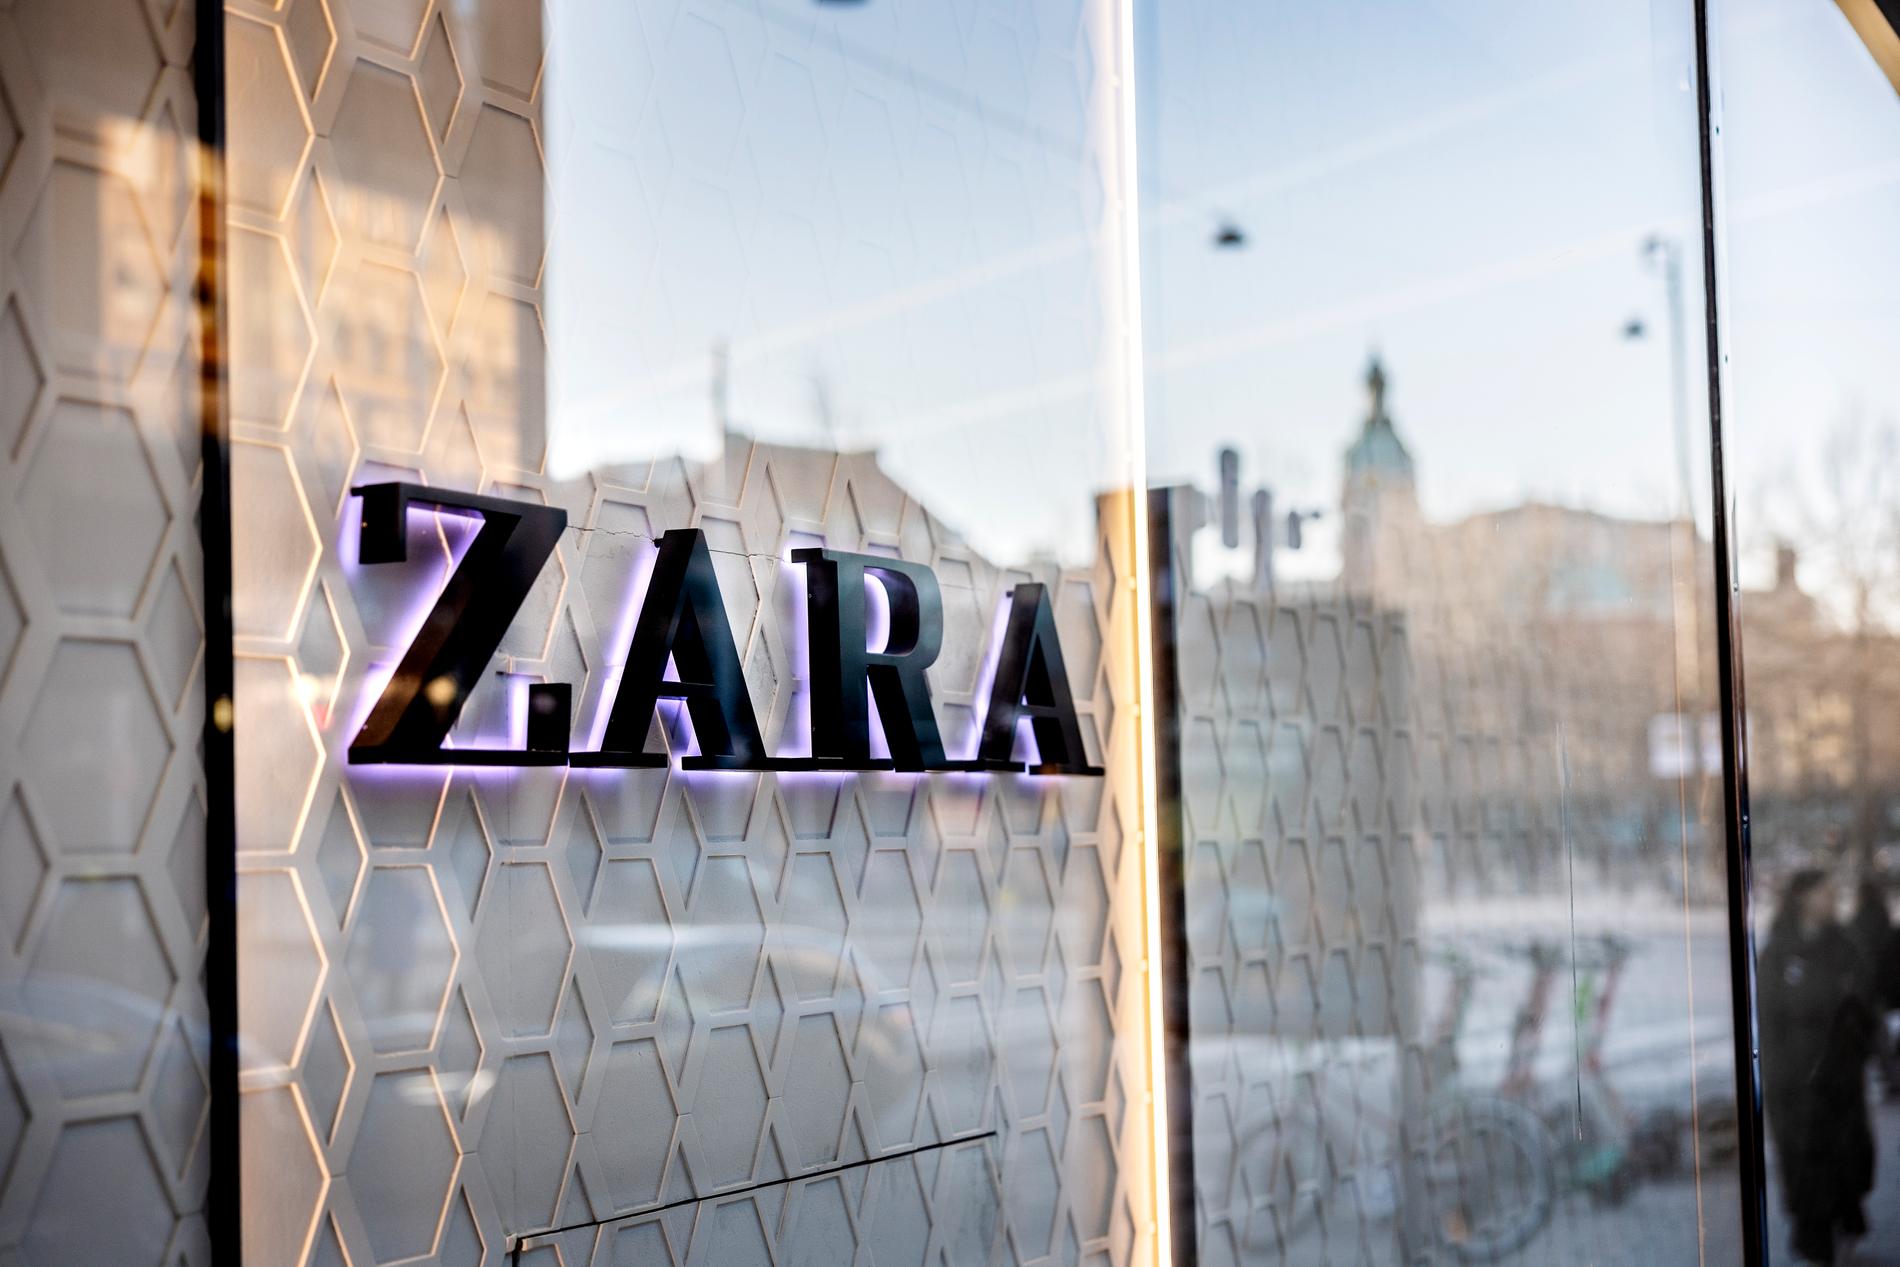 A Zara store in Sweden.